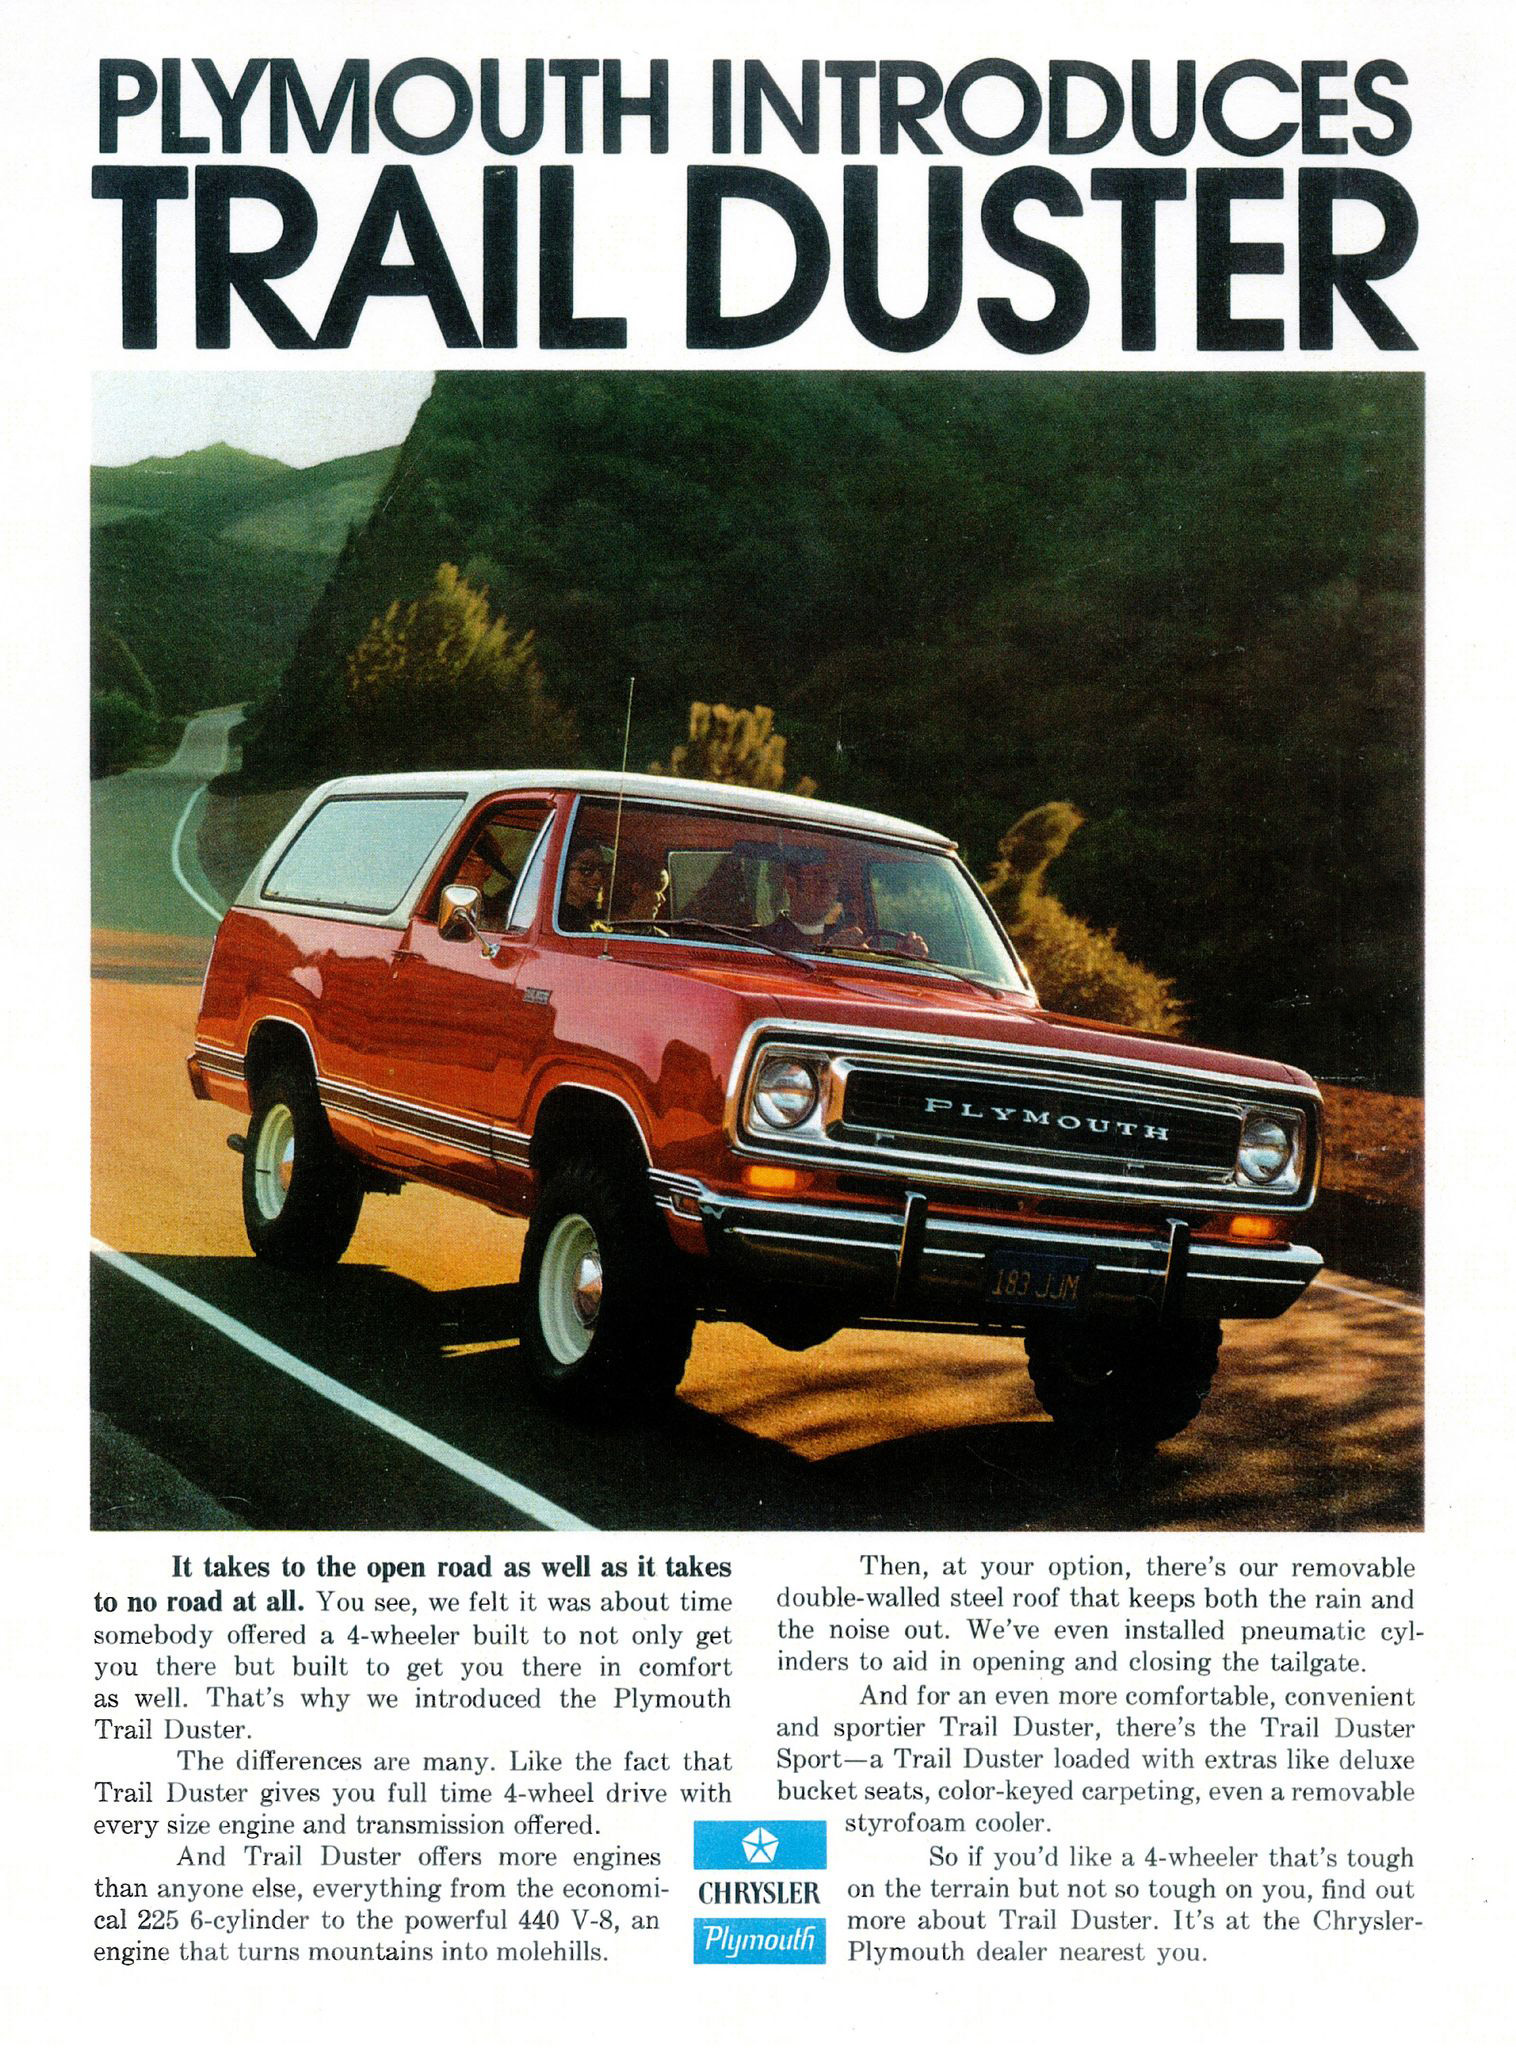 1975 Plymouth Trailduster